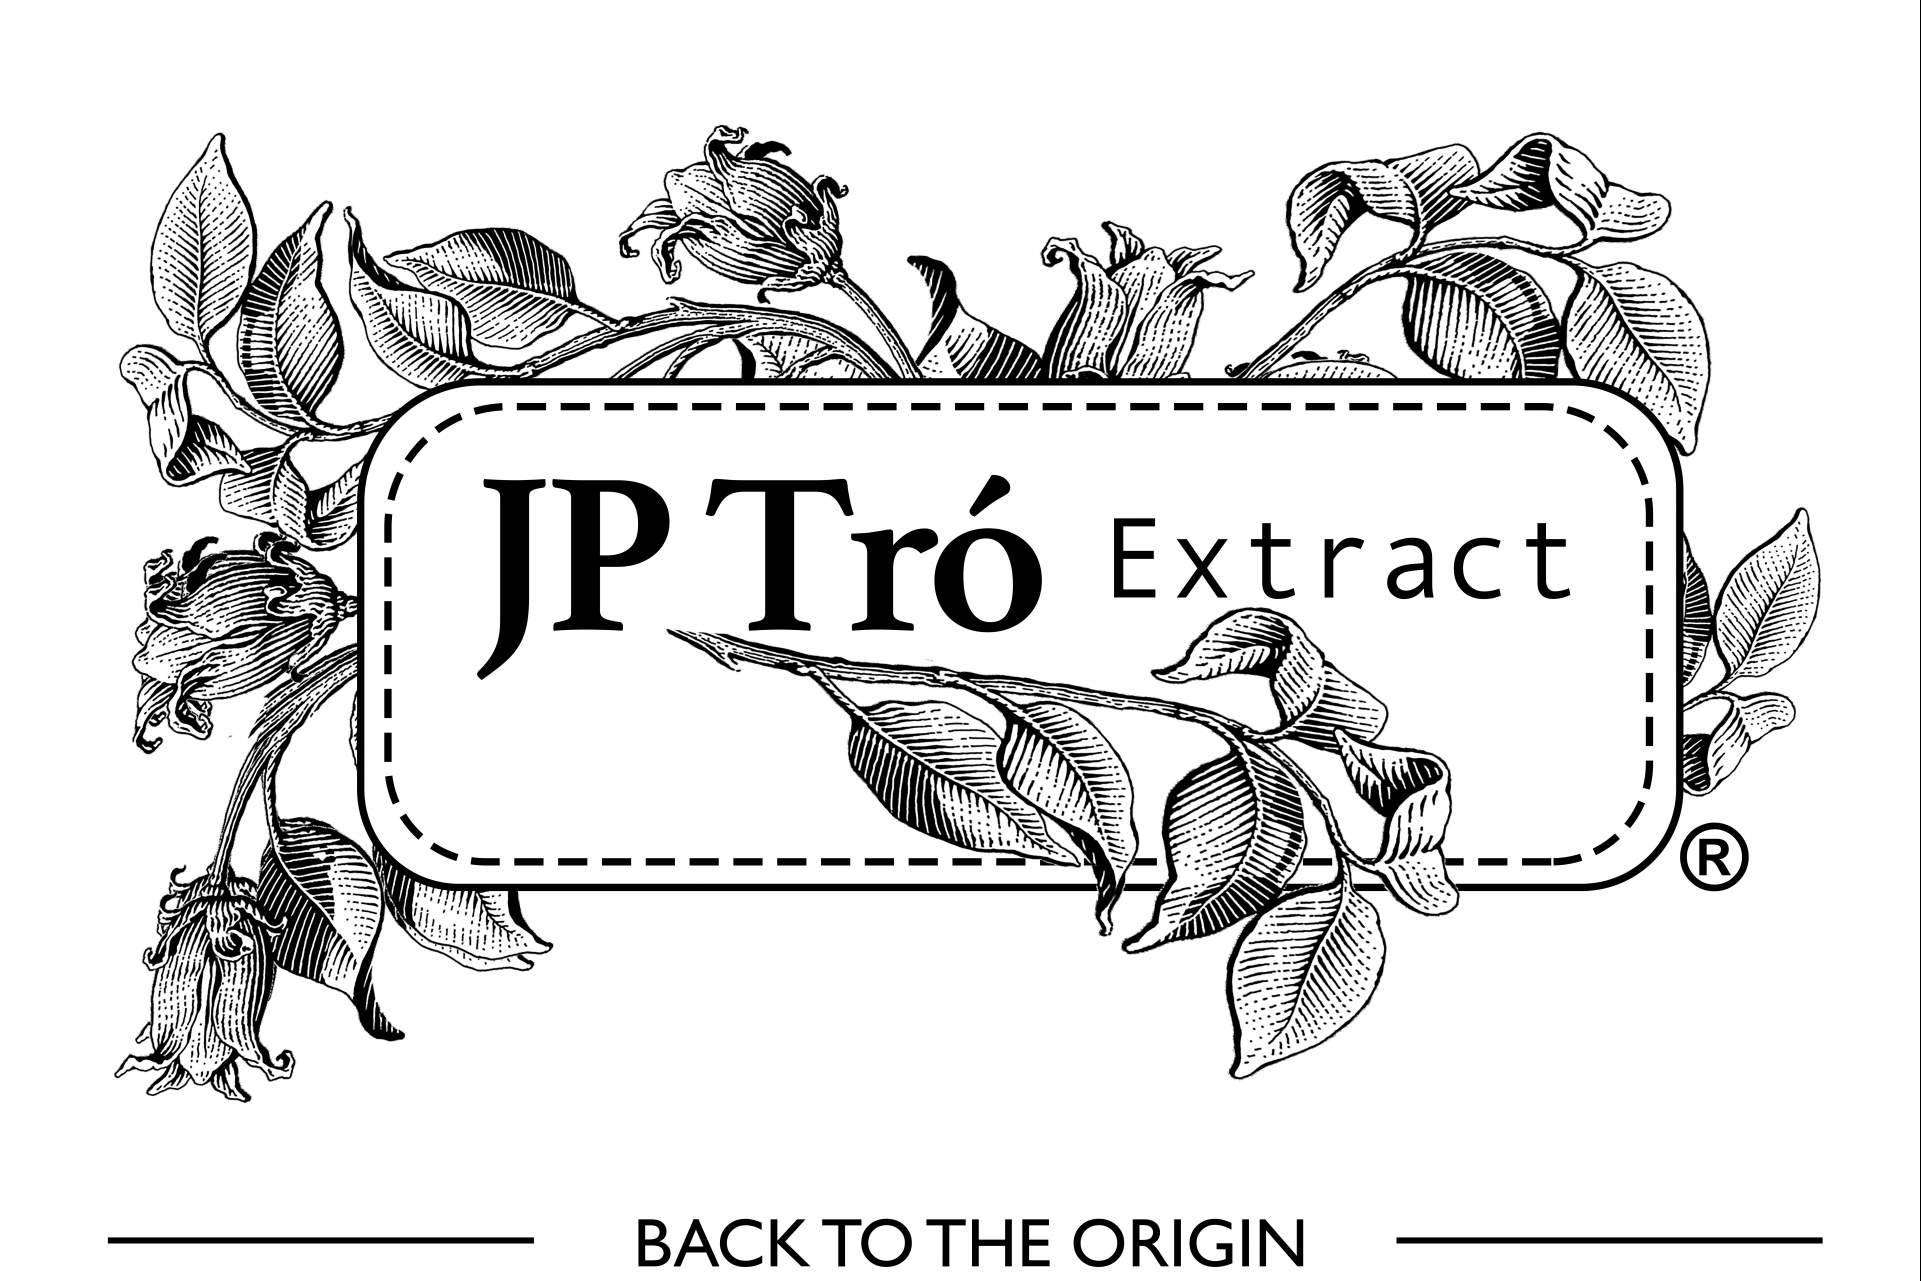 Productos JP Tró Extract